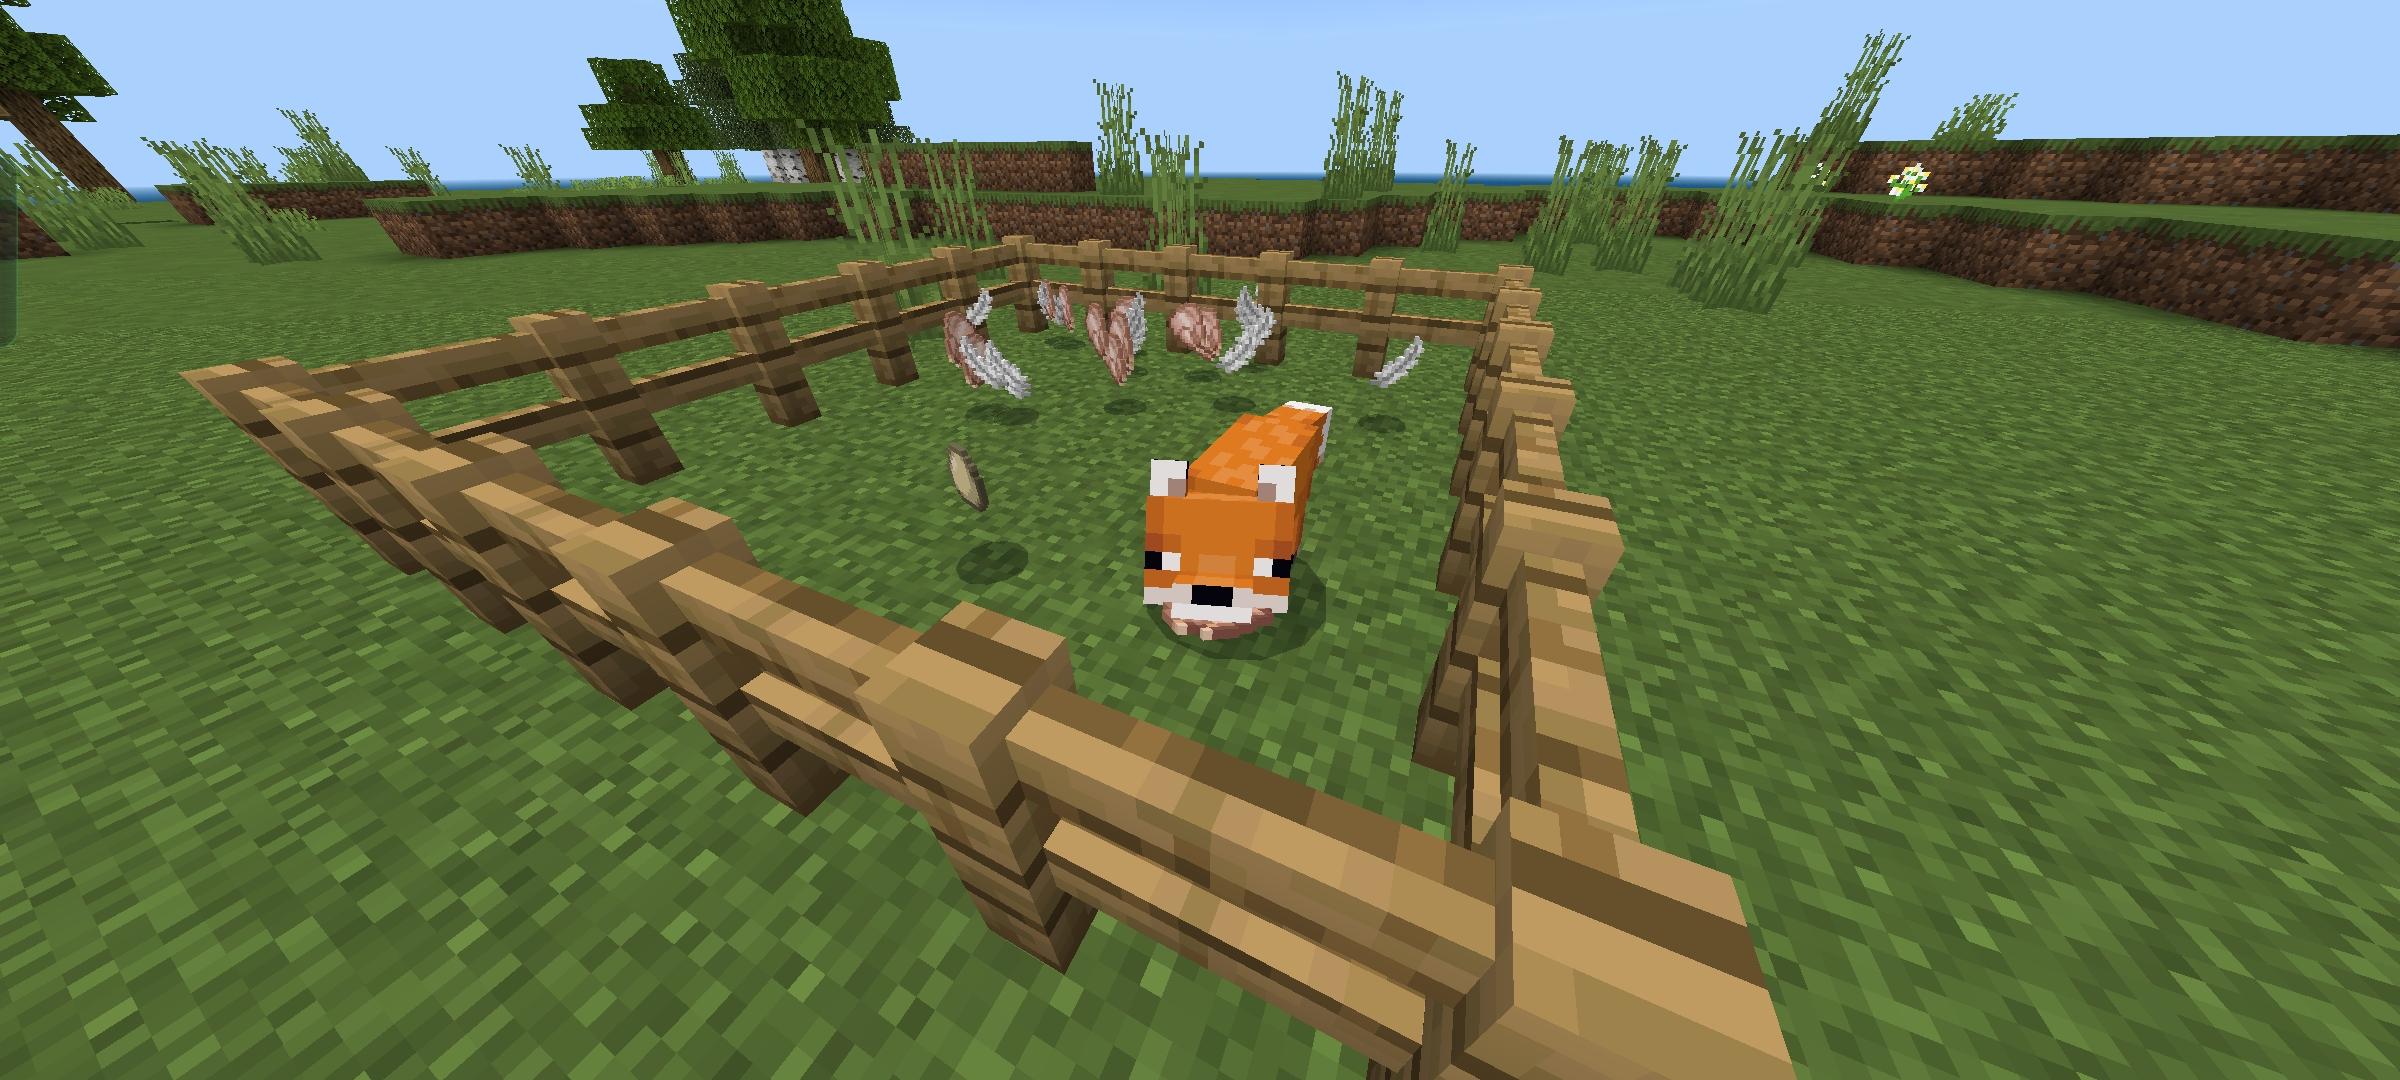 Minecraft Memes - "Orange wolves' fence jumping- idiotic?"